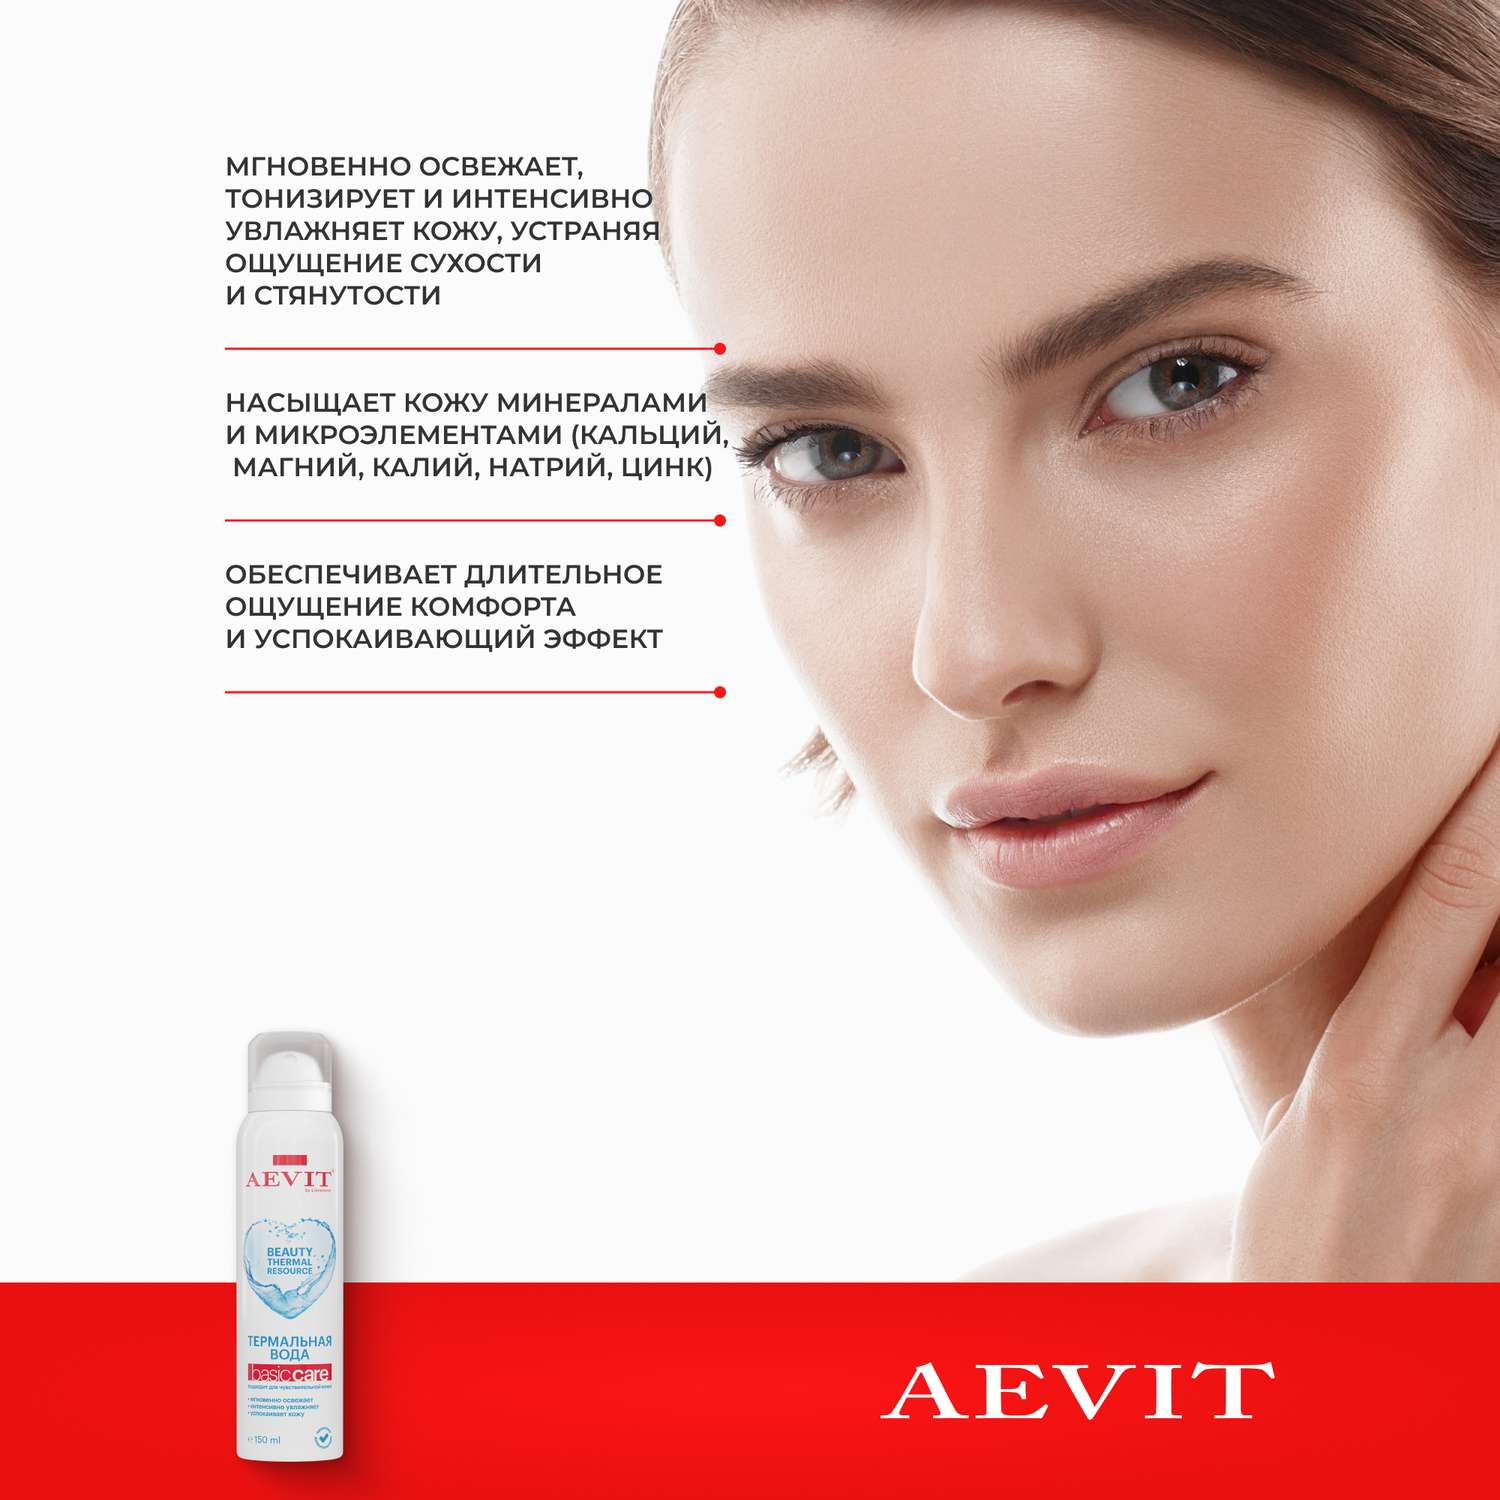 Термальная вода AEVIT BASIC CARE для всех типов кожи 150 мл - фото 3